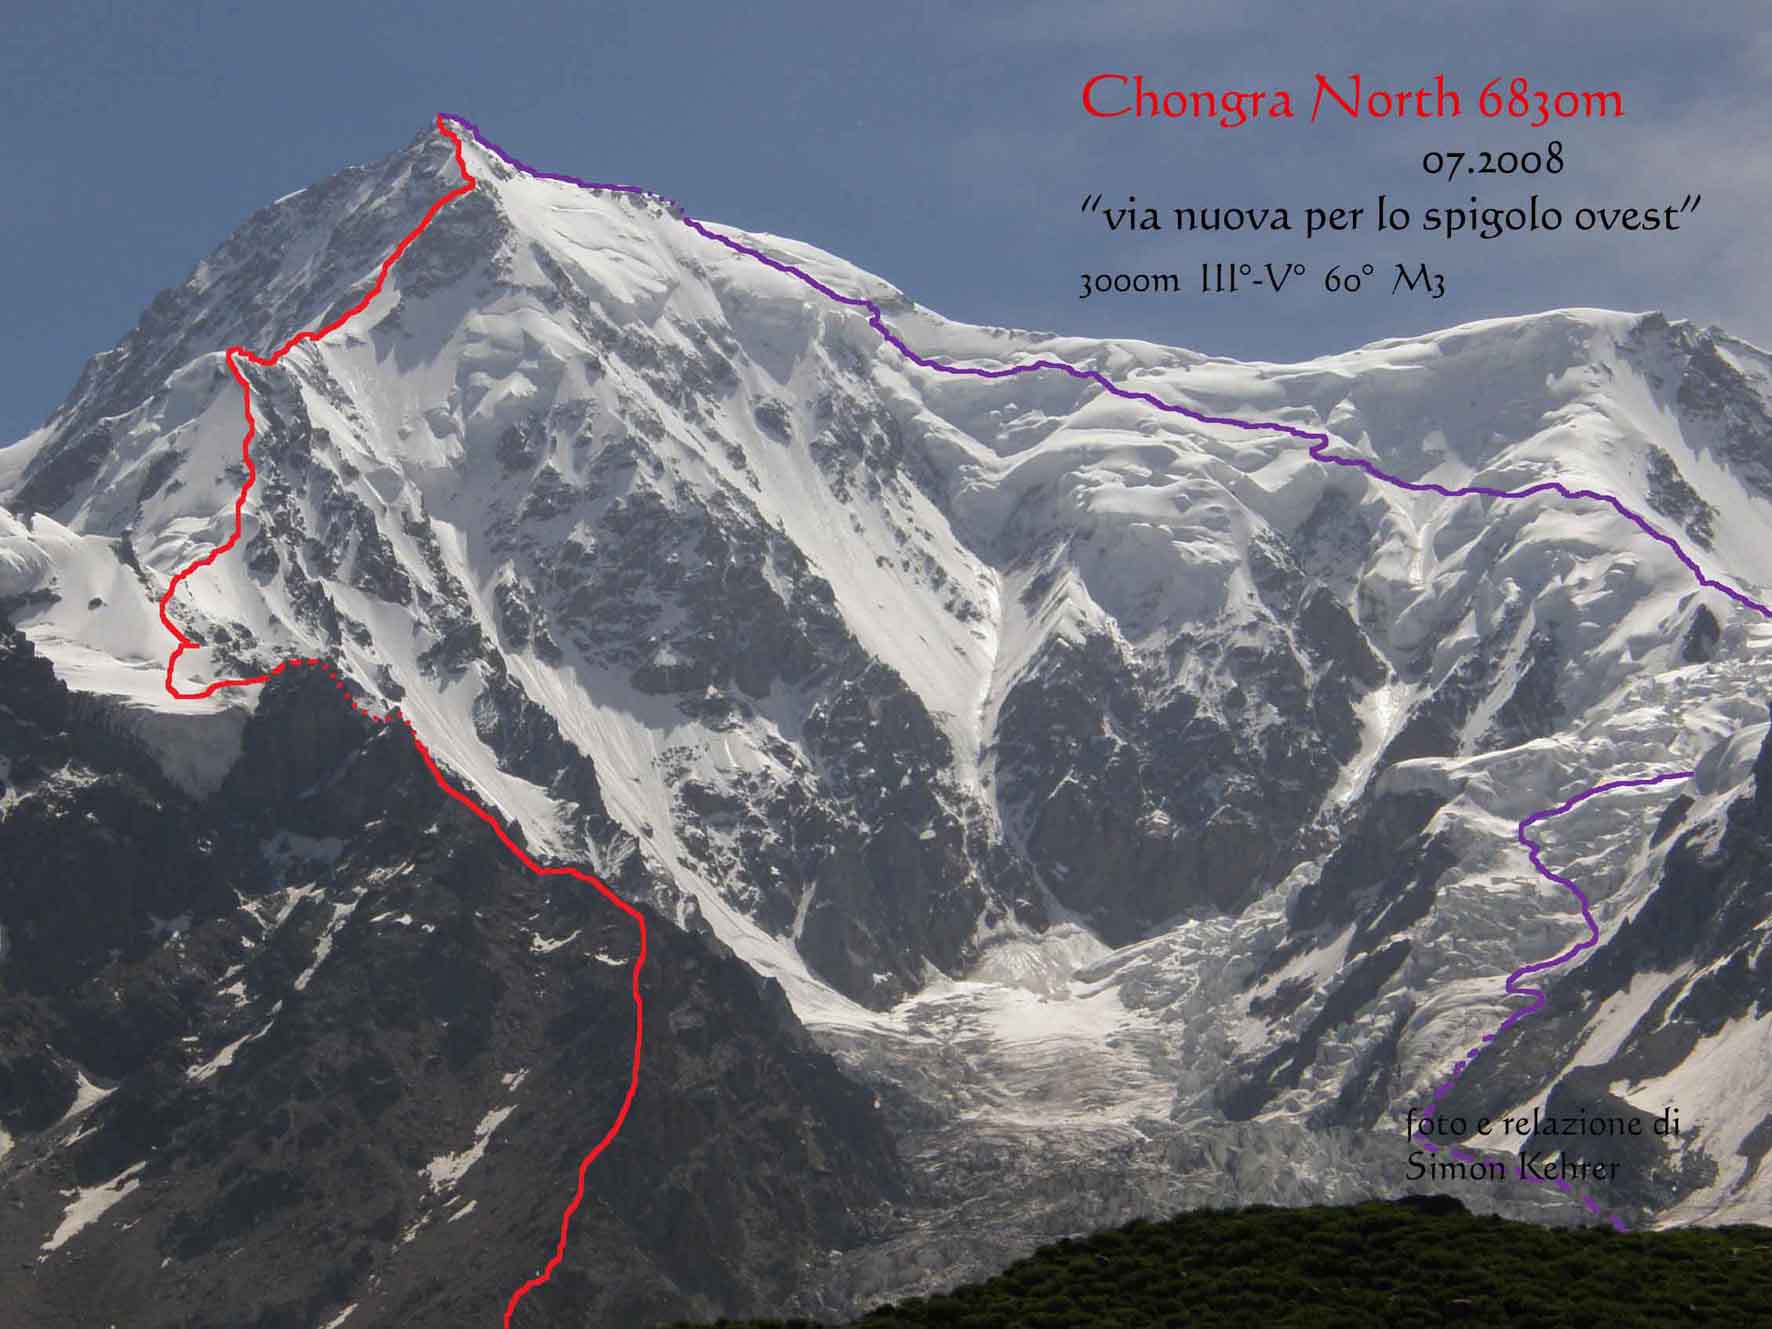 Chongra North Relazione